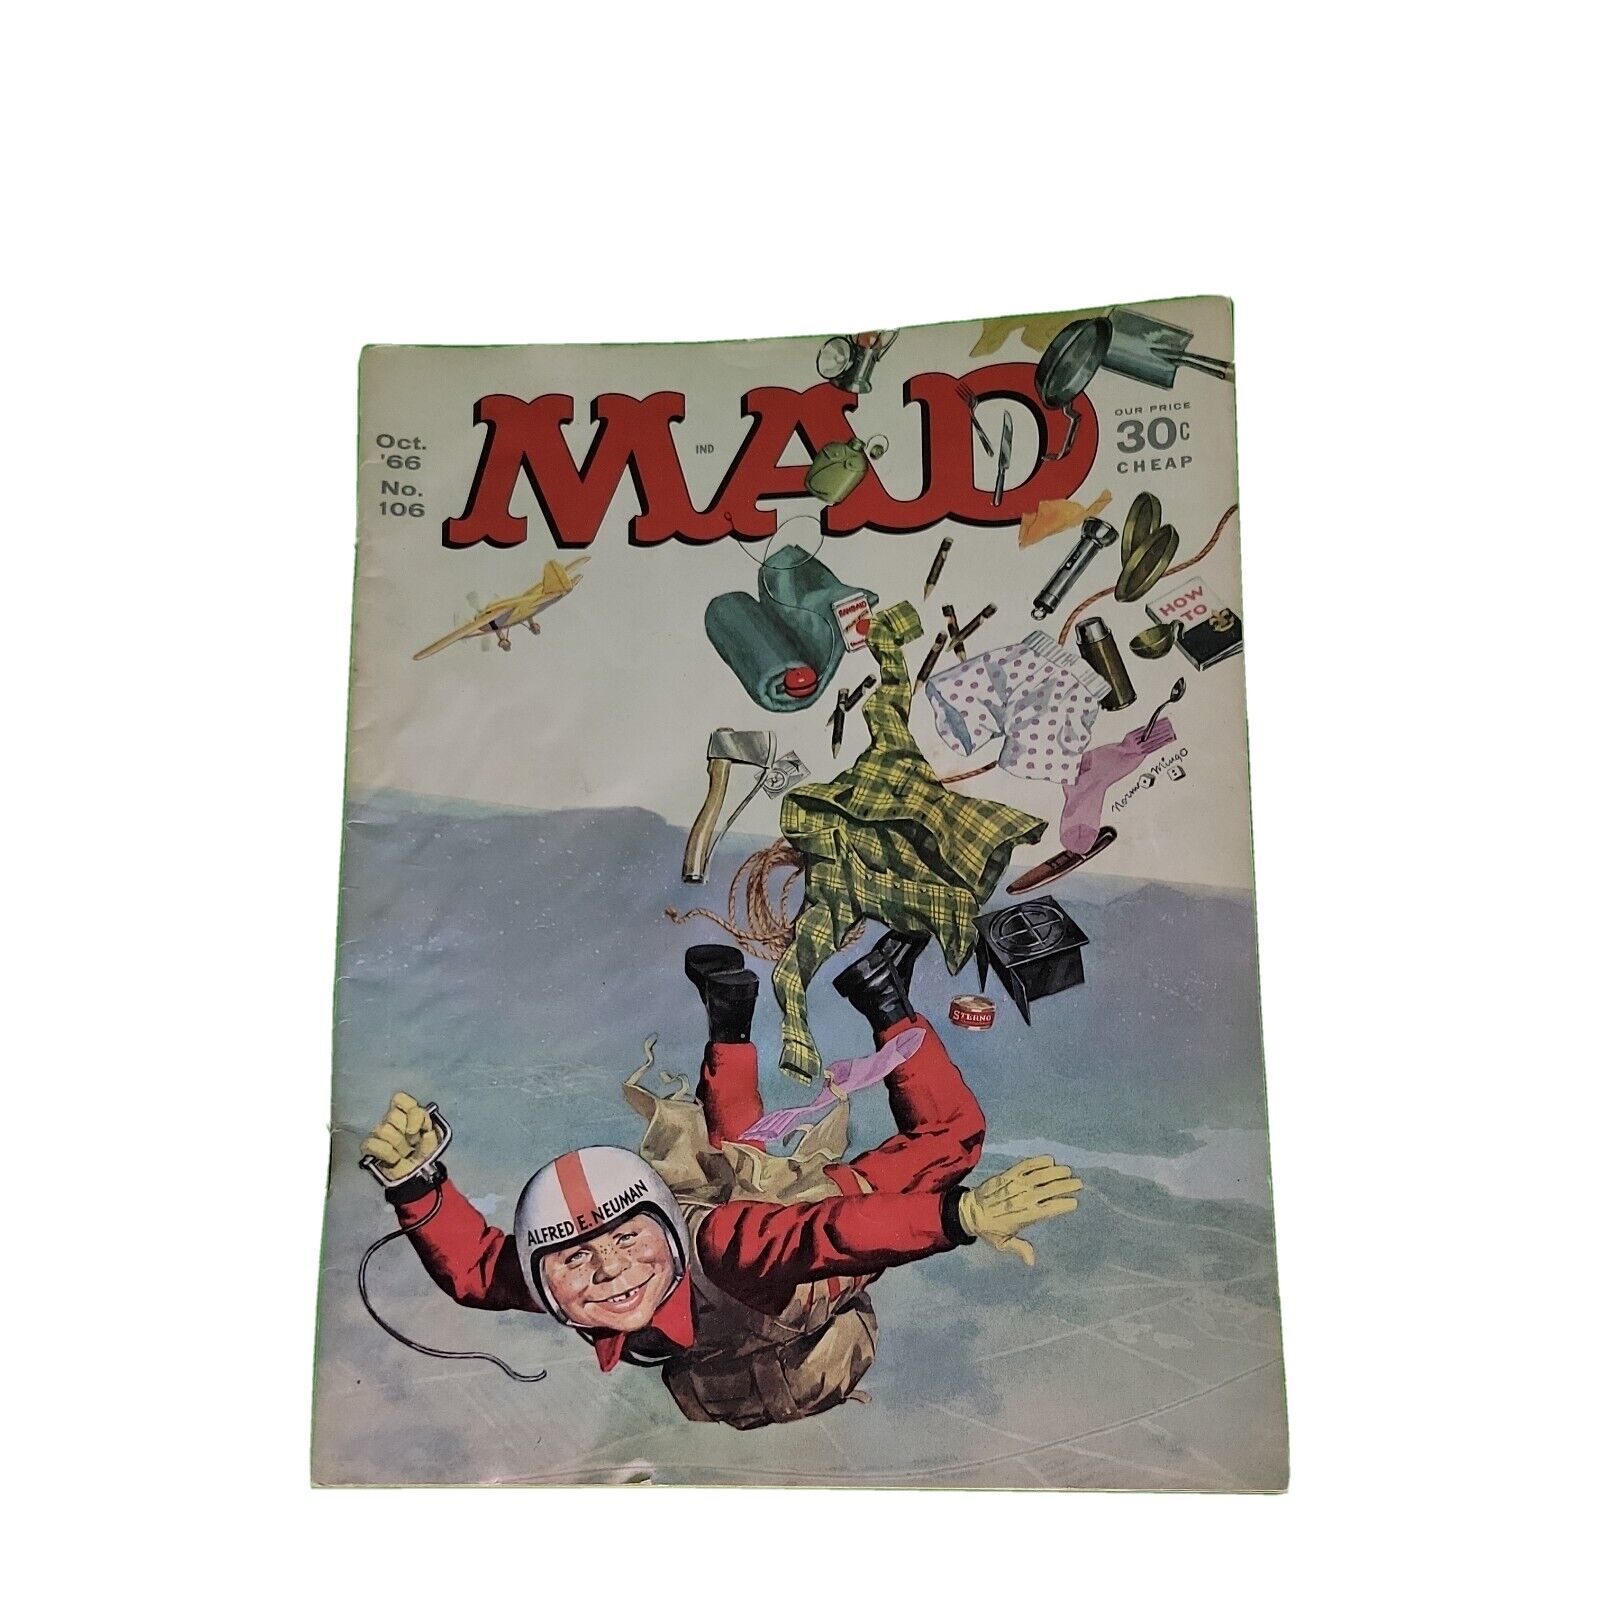 MAD MAGAZINE #106 October 1966 Frank Frazetta Back Cover Art Norman Mingo Spy v 